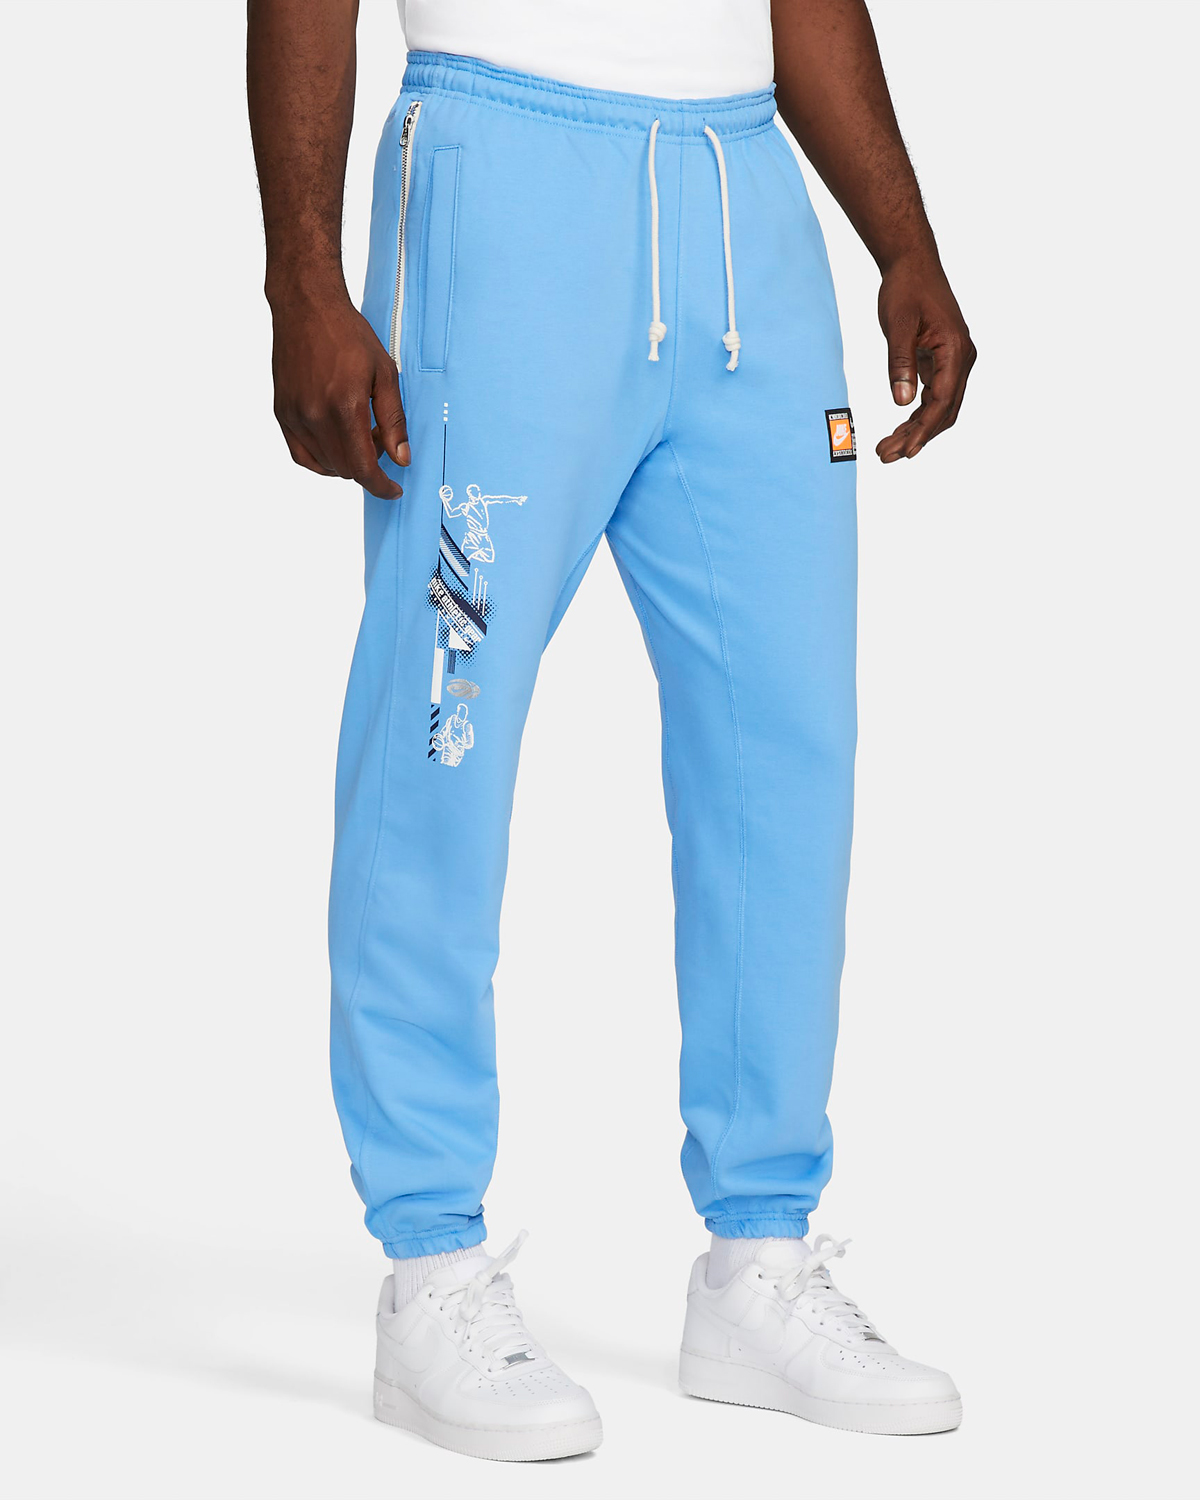 Nike-Standard-Issue-Pants-University-Blue-1